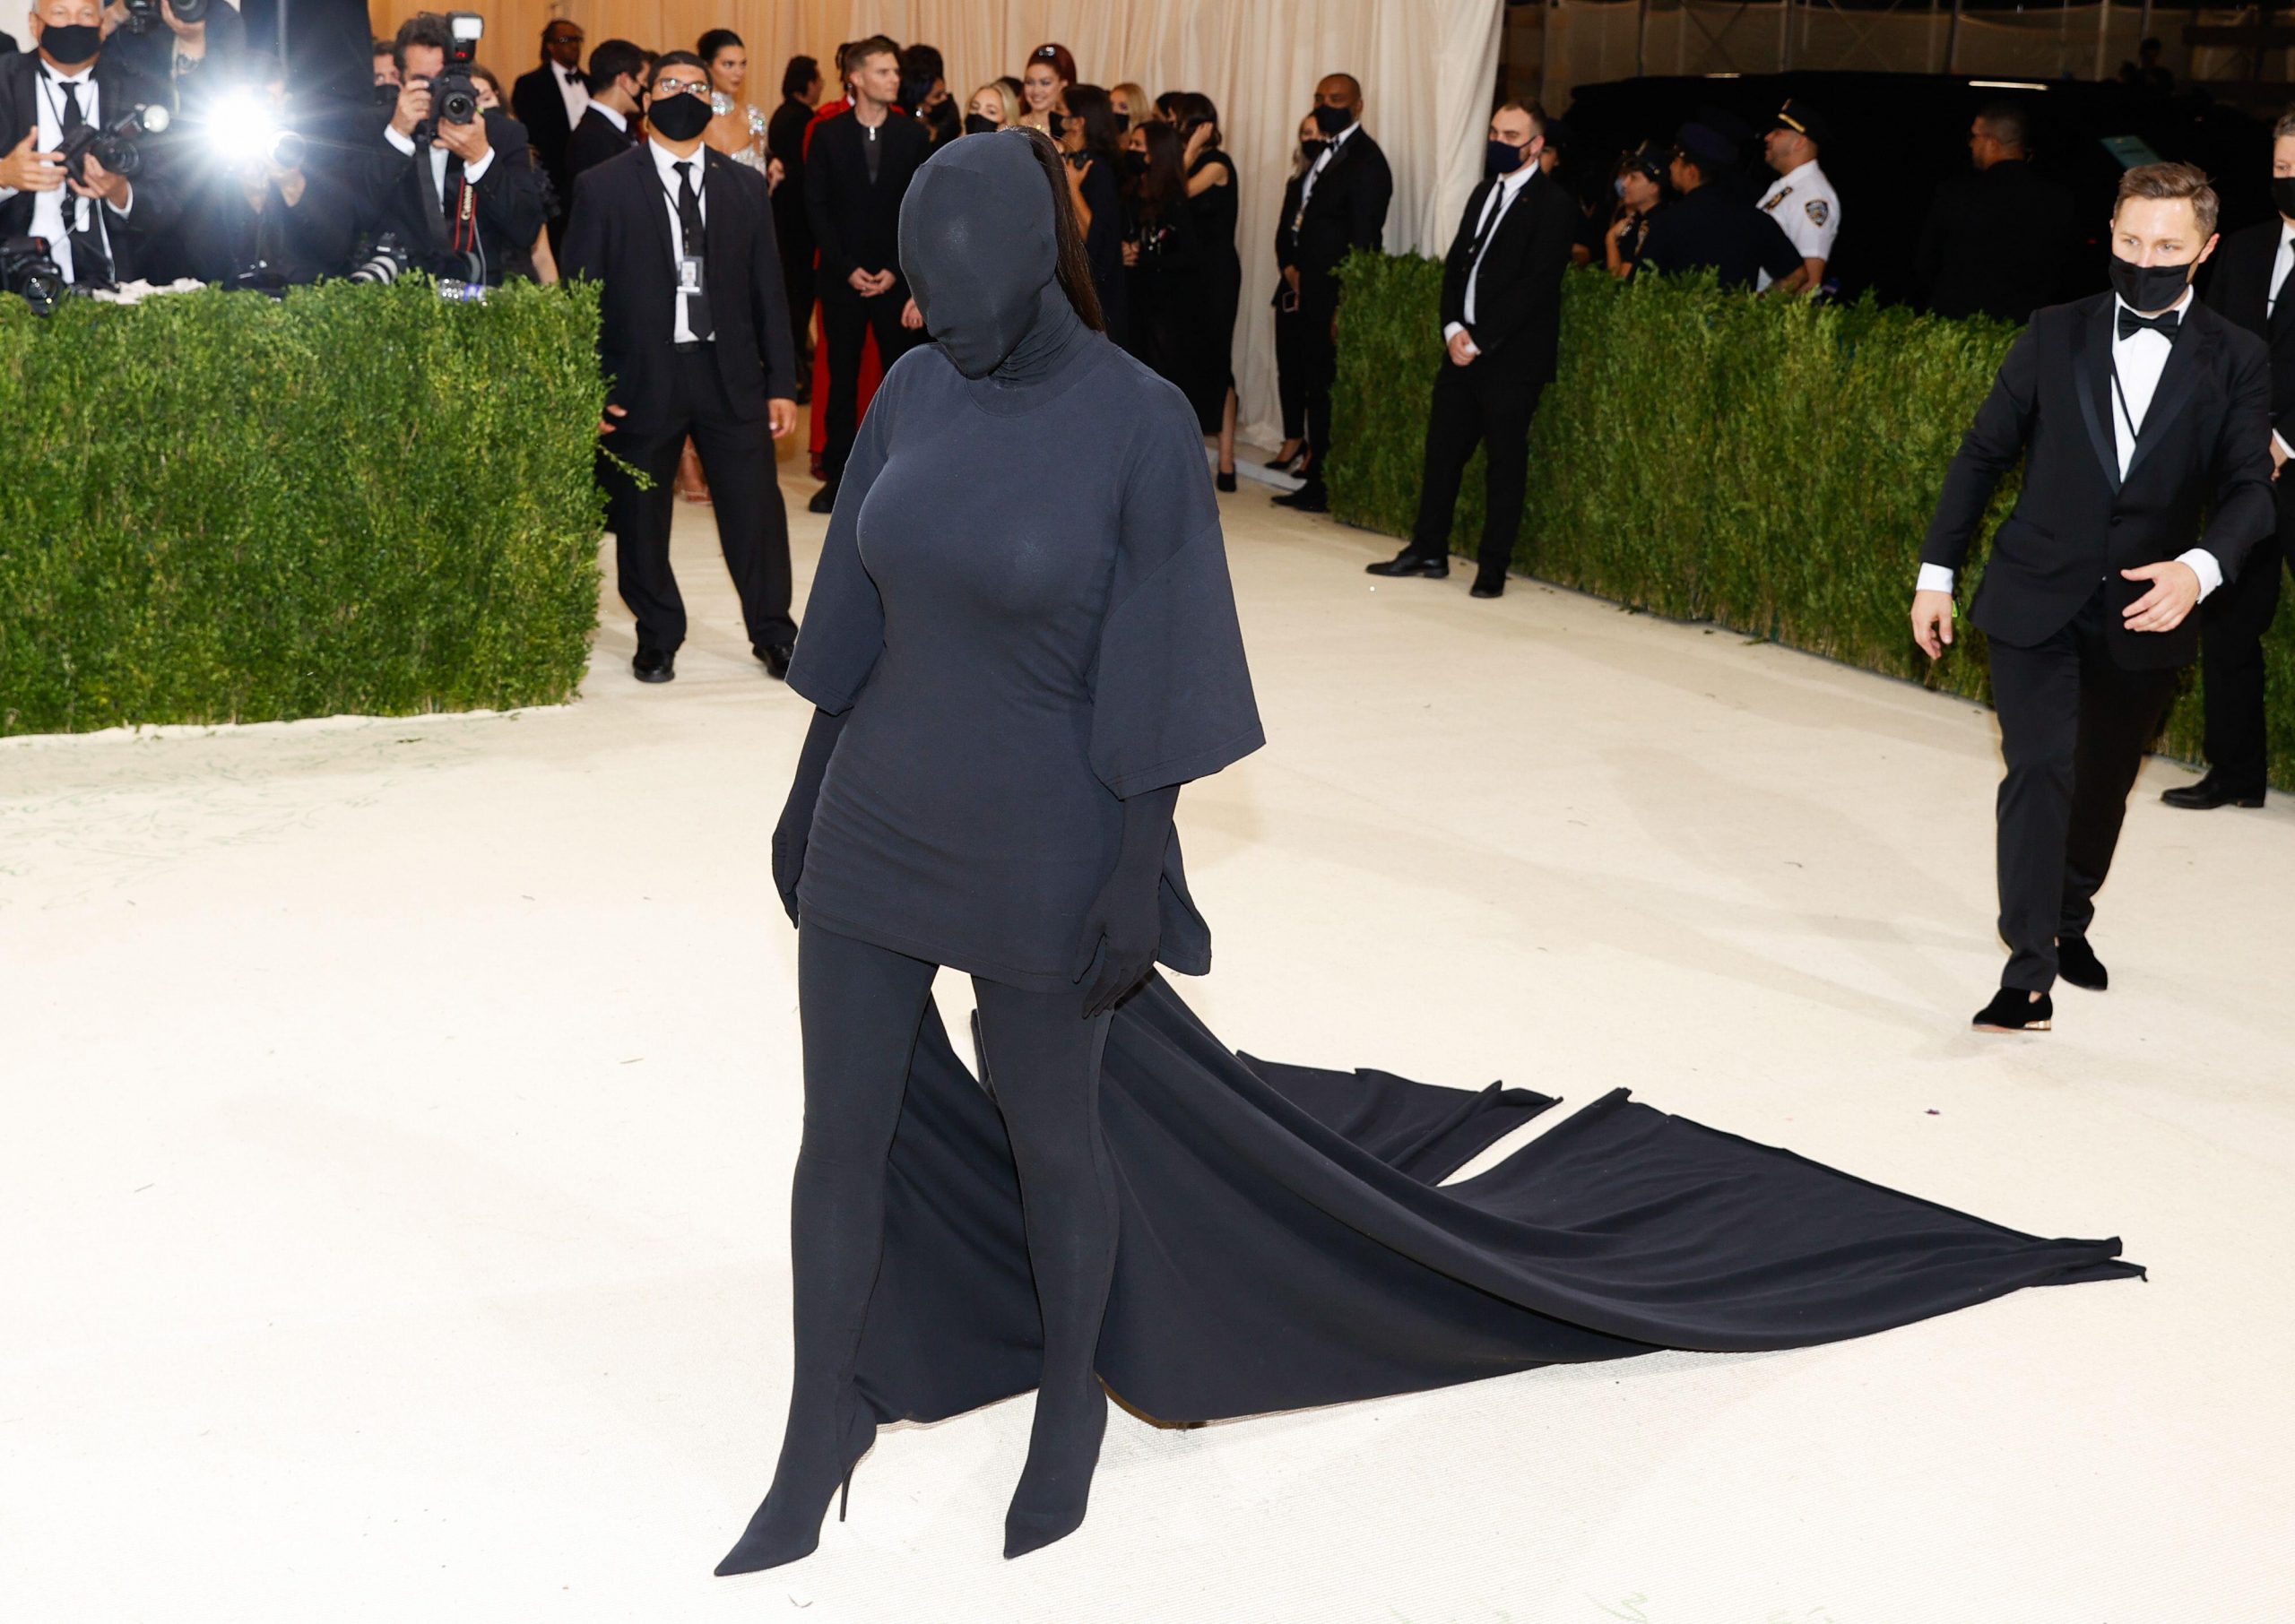 Kim Kardashian arrives on the red carpet for The Met Gala, 2021. Photo by John Angelillo/UPI. Credit: UPI/Alamy Live News